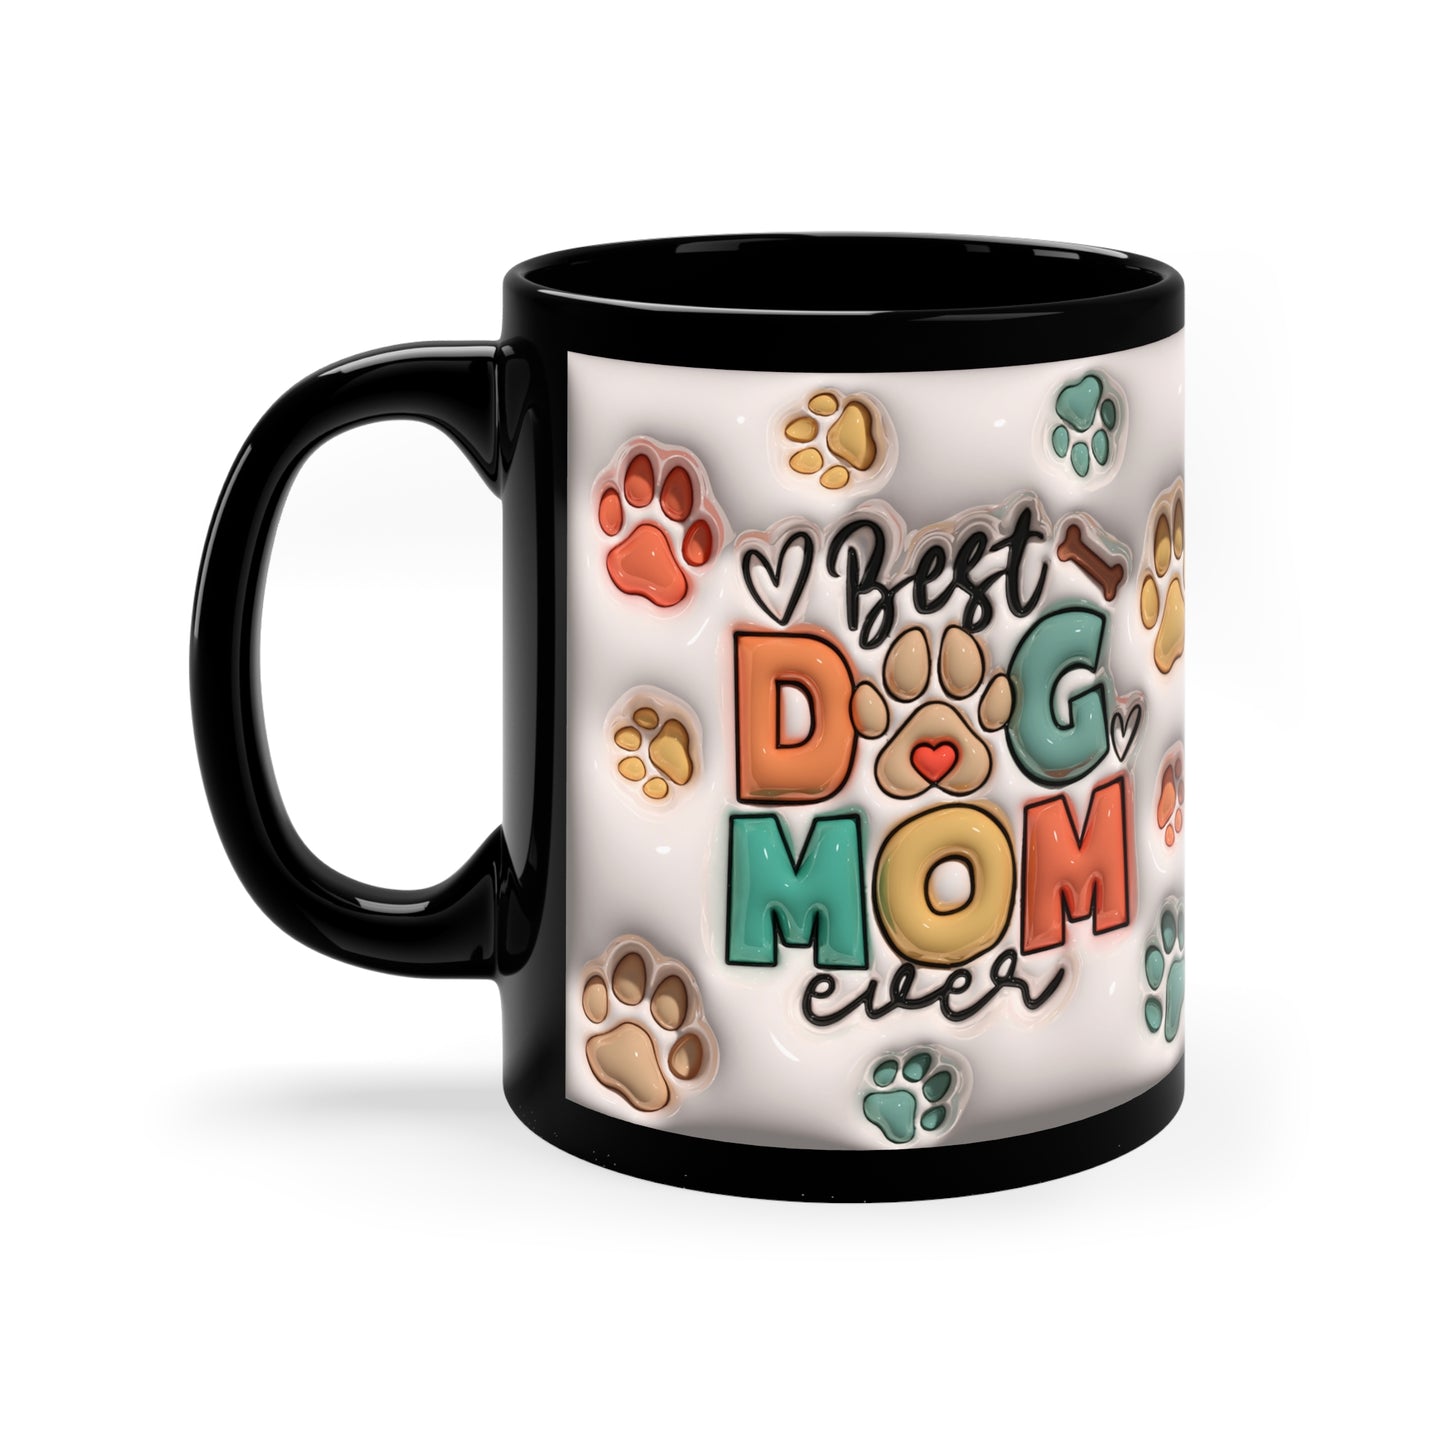 BEST DOG MOM MUG - 3D MUGS - MUGSCITY - Free Shipping